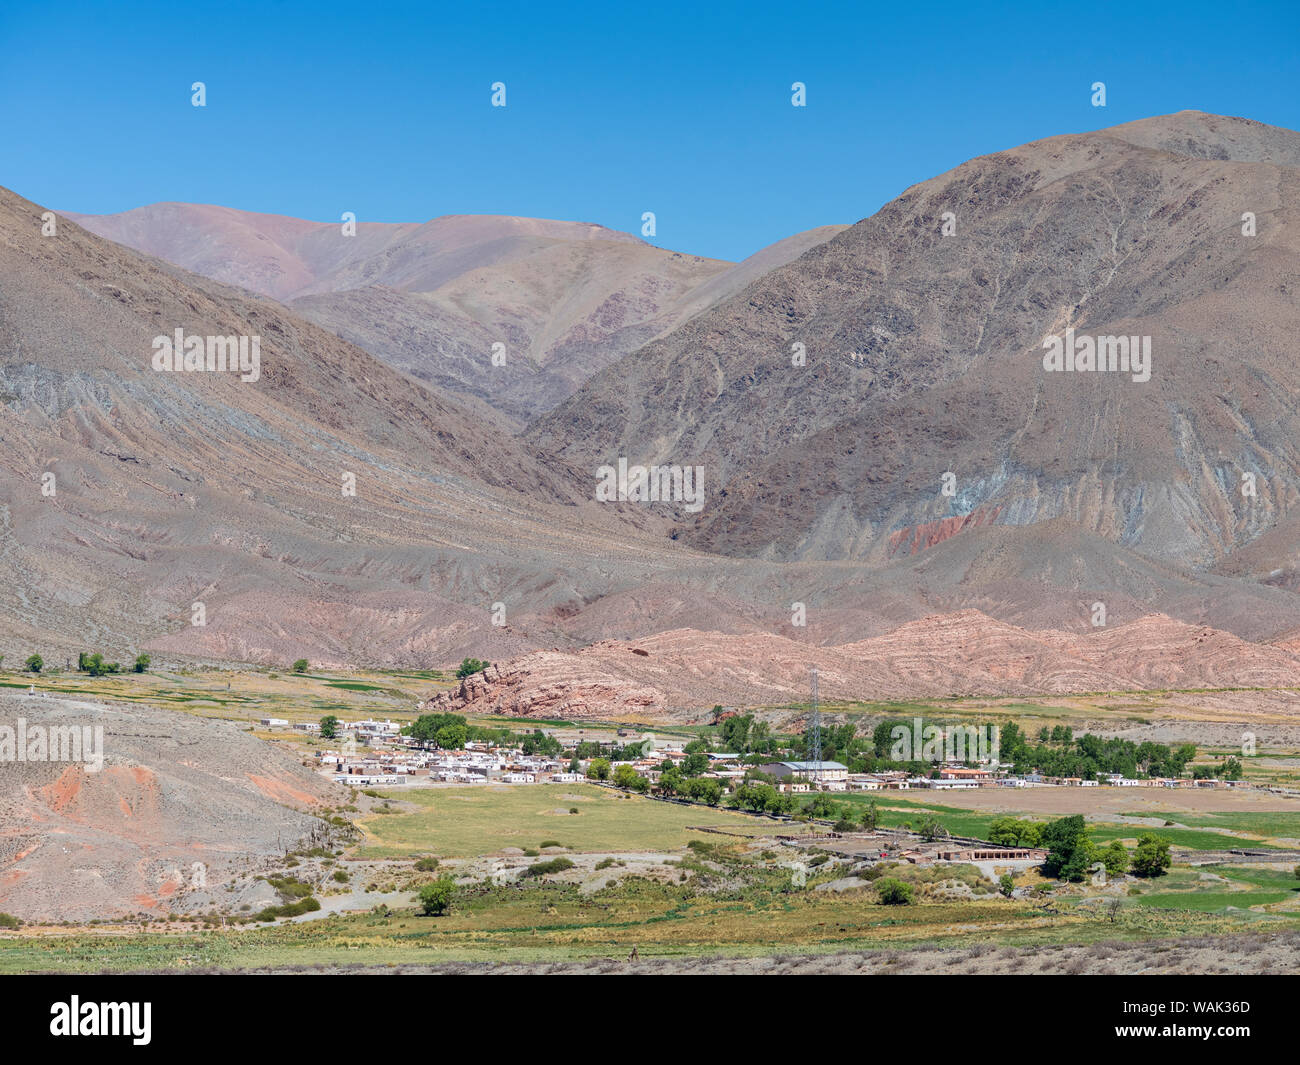 Village La Poma, last settlement in the valley of Calchaqui. The Altiplano in Argentina, landscape along RN 40 near mountain pass Abra del Acay (4895m). South America, Argentina Stock Photo